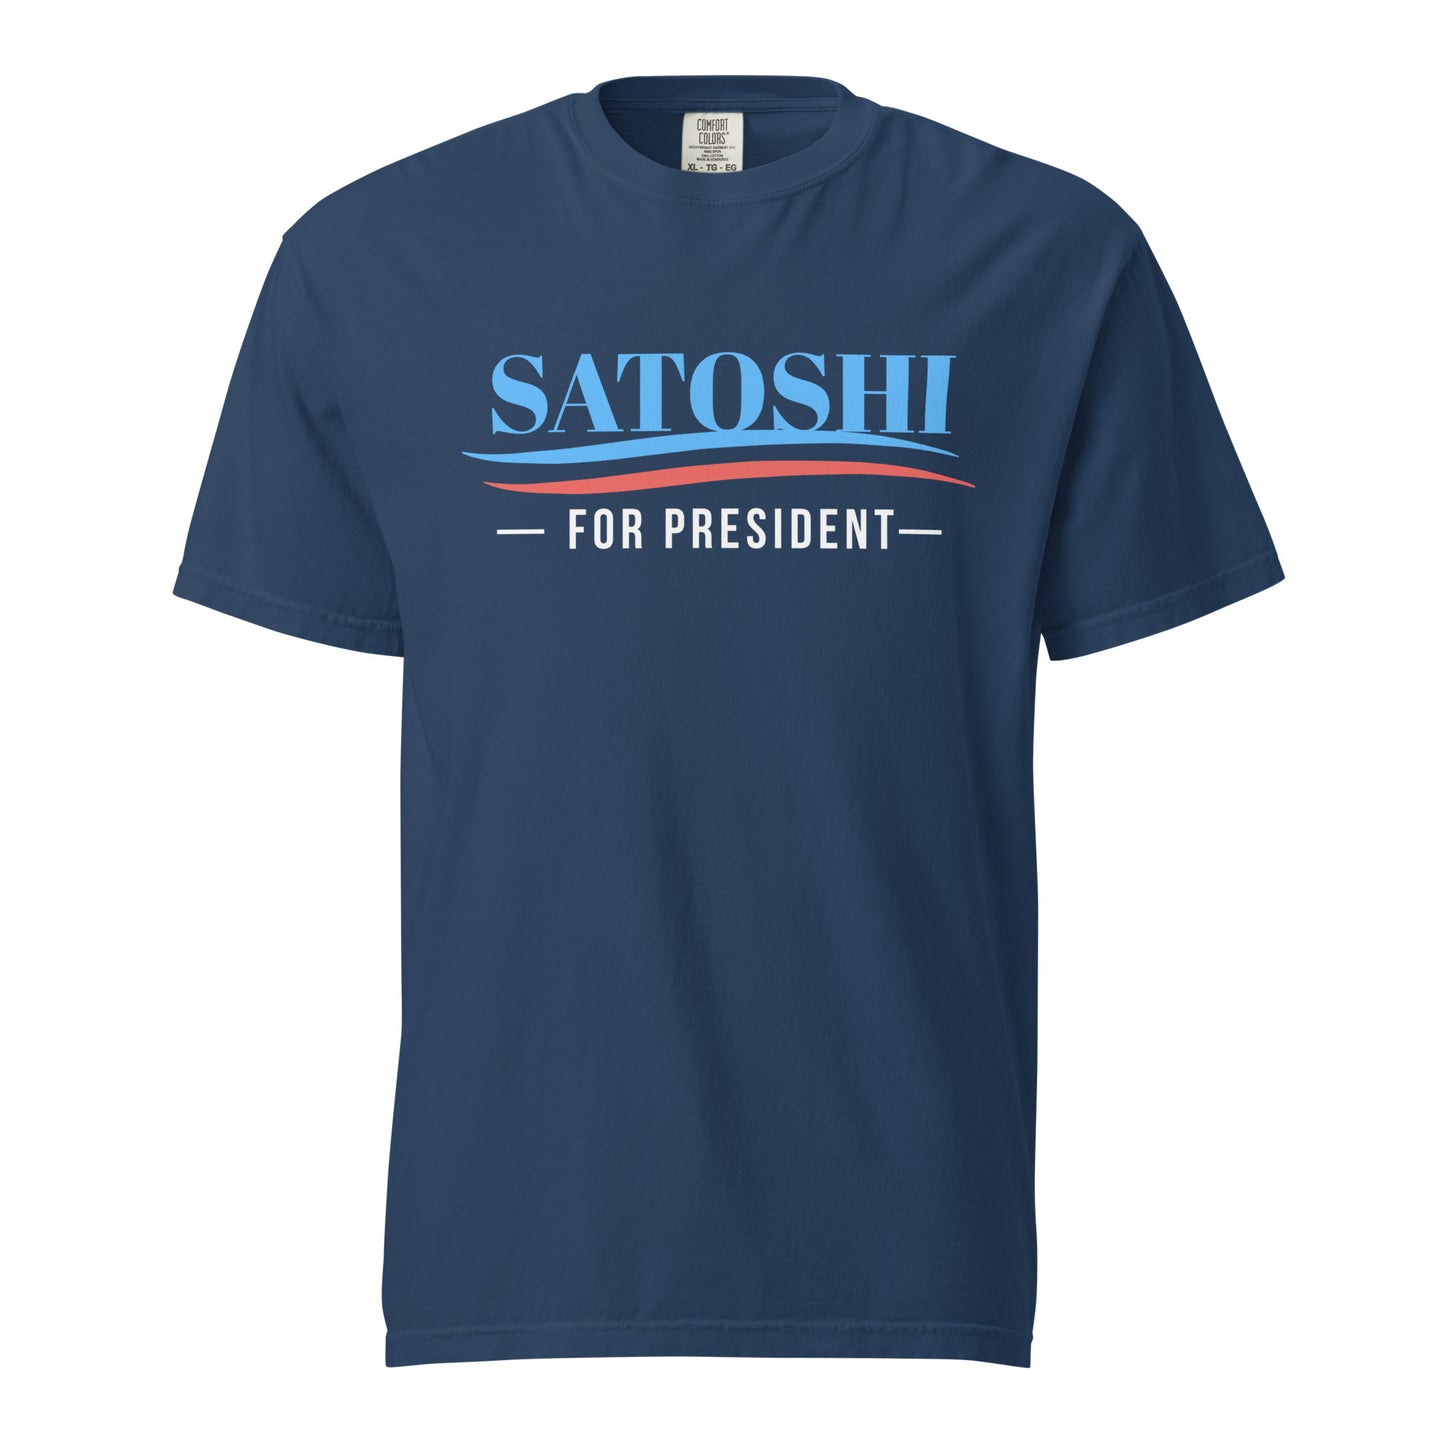 Satoshi for president heavyweight t-shirt